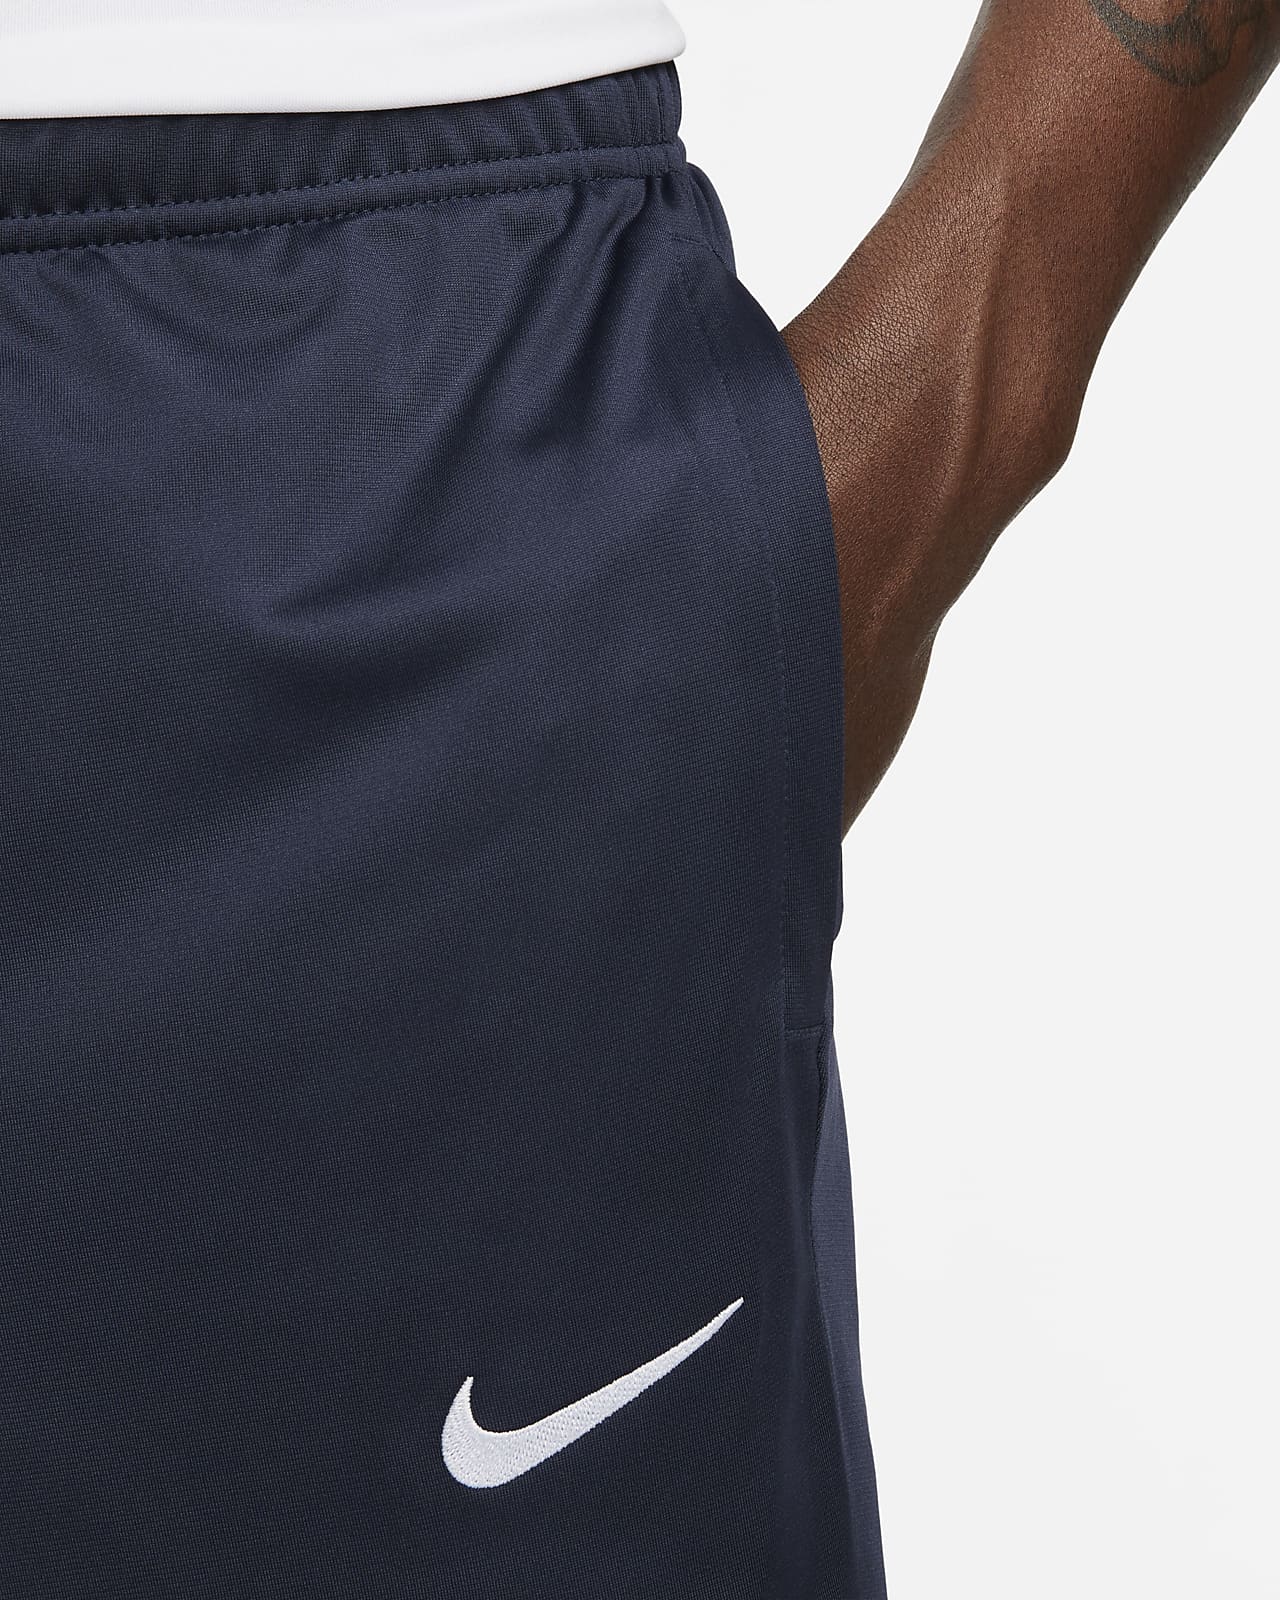 Nike Academy Men's Dri-FIT Soccer Track Pants.